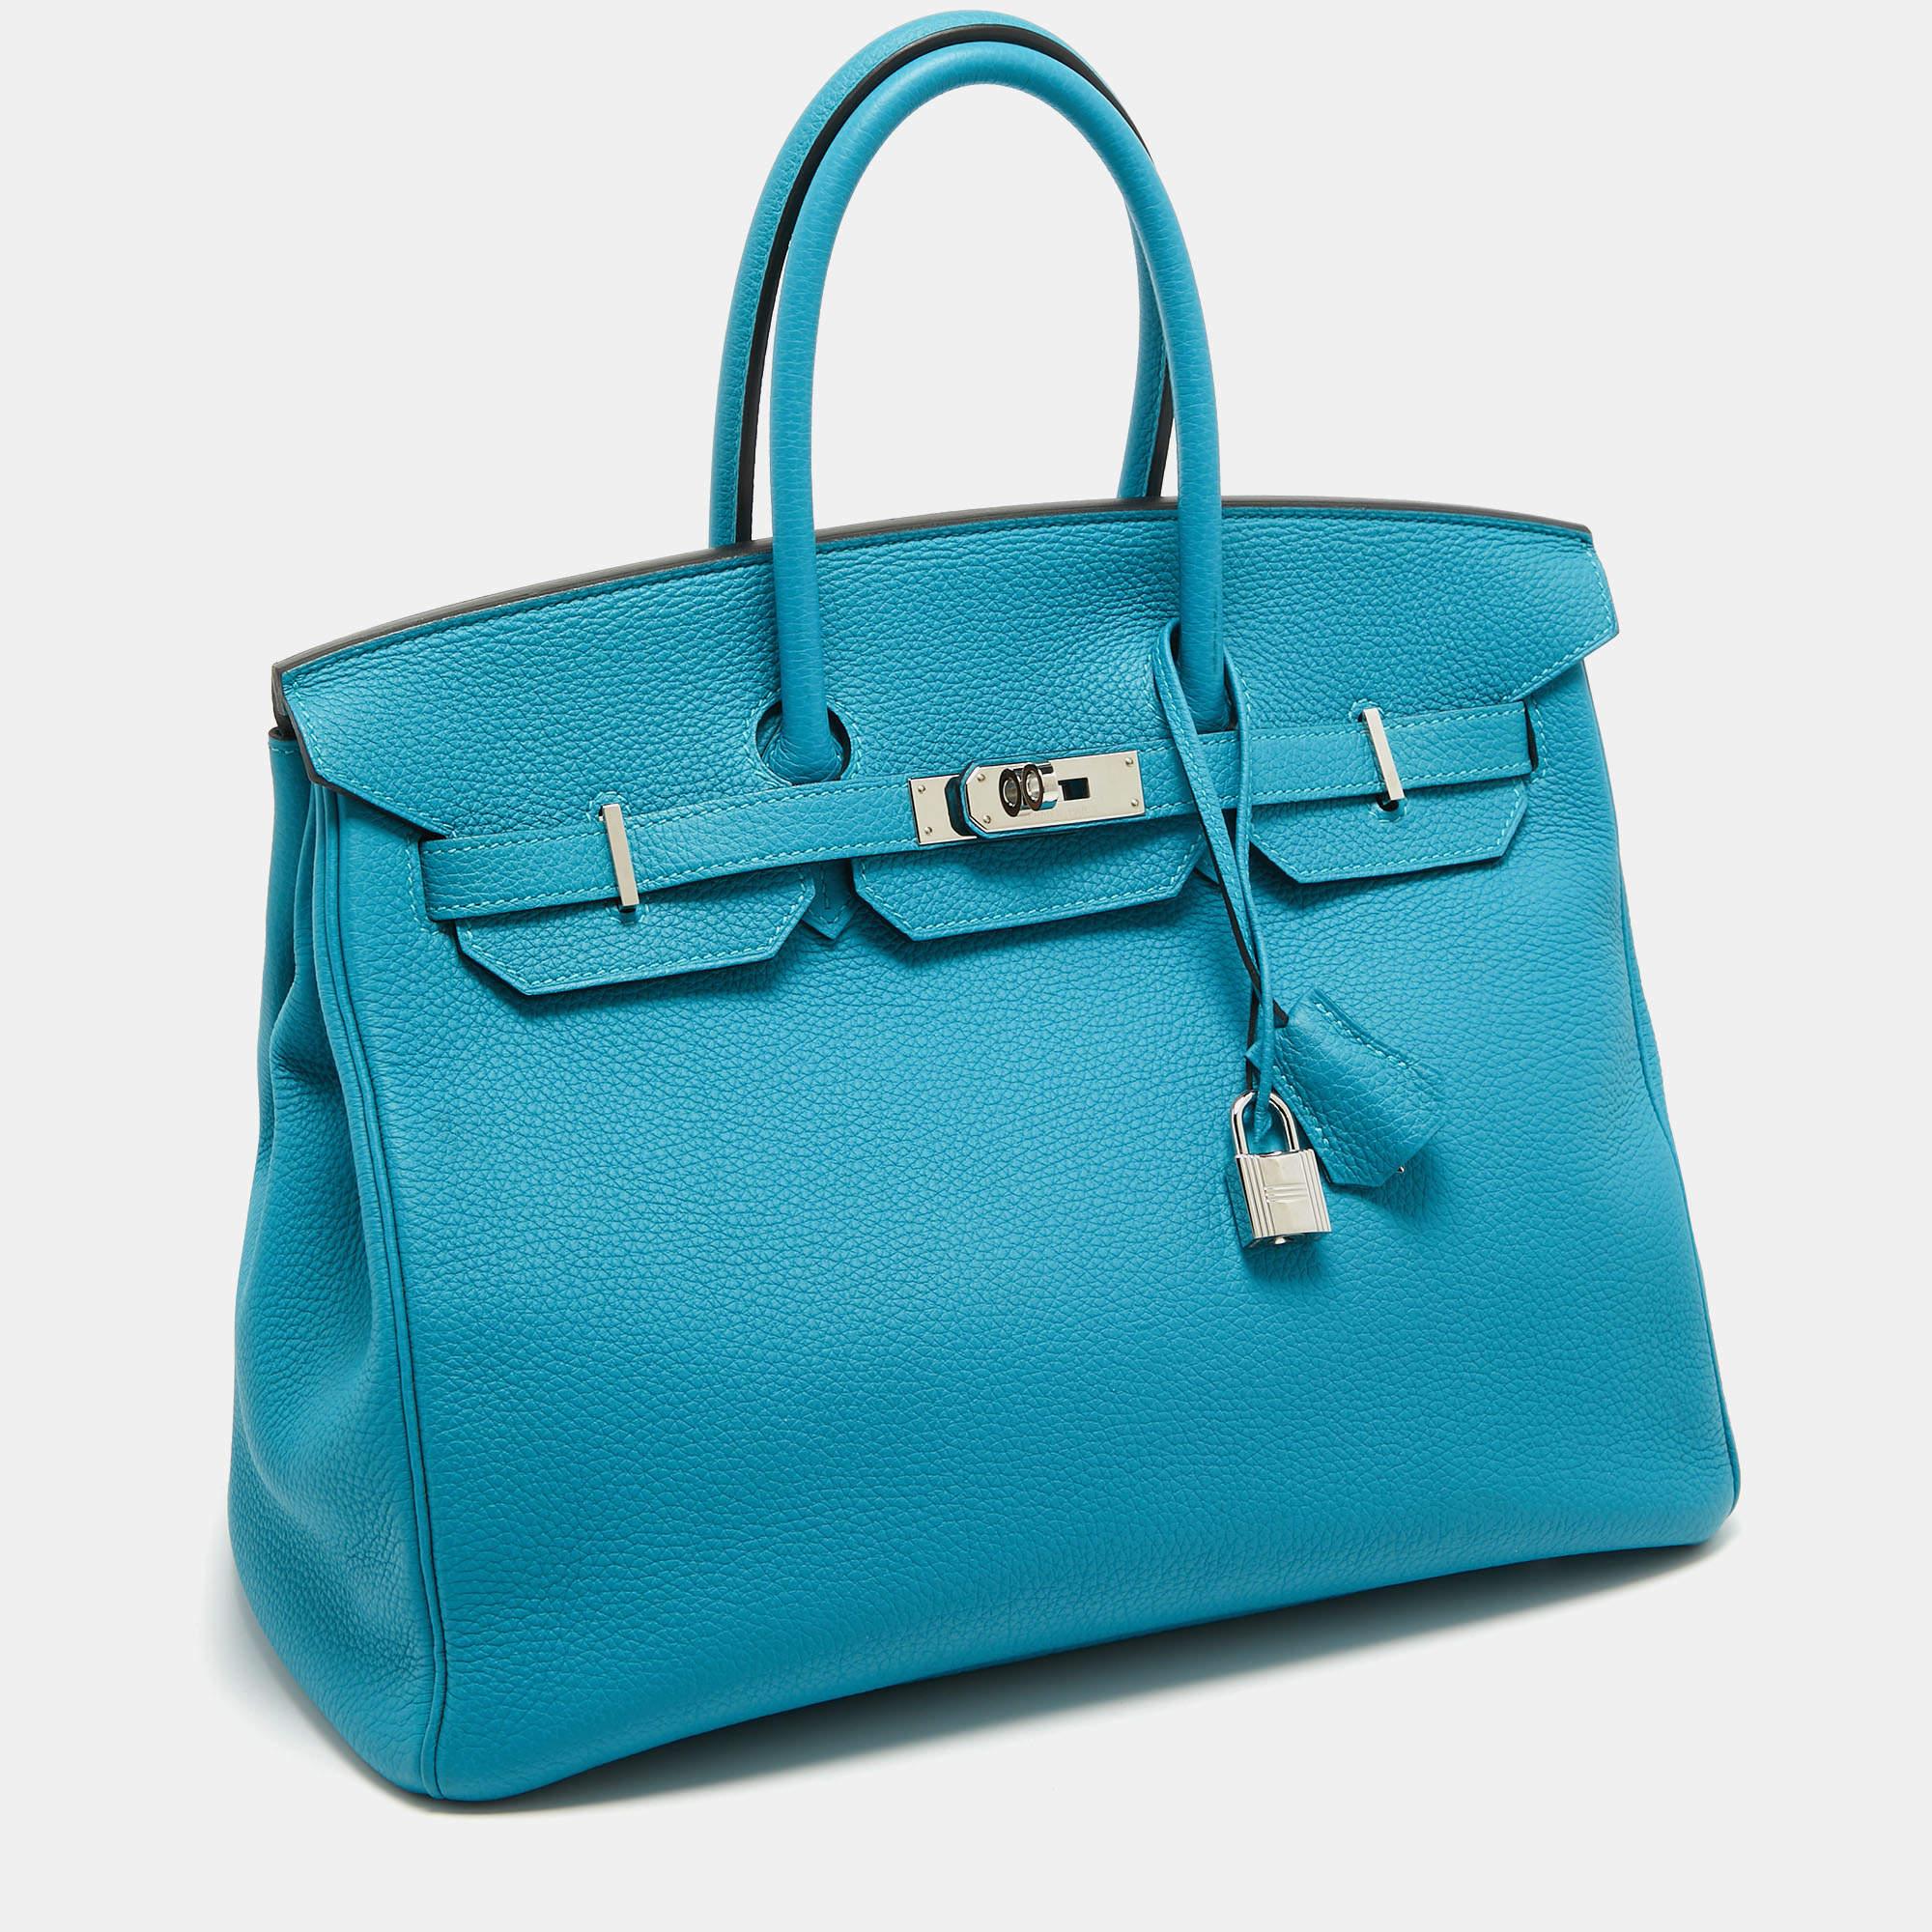 Hermes Turquoise Blue Togo Leather Palladium Finish Birkin 35 Bag In Good Condition For Sale In Dubai, Al Qouz 2